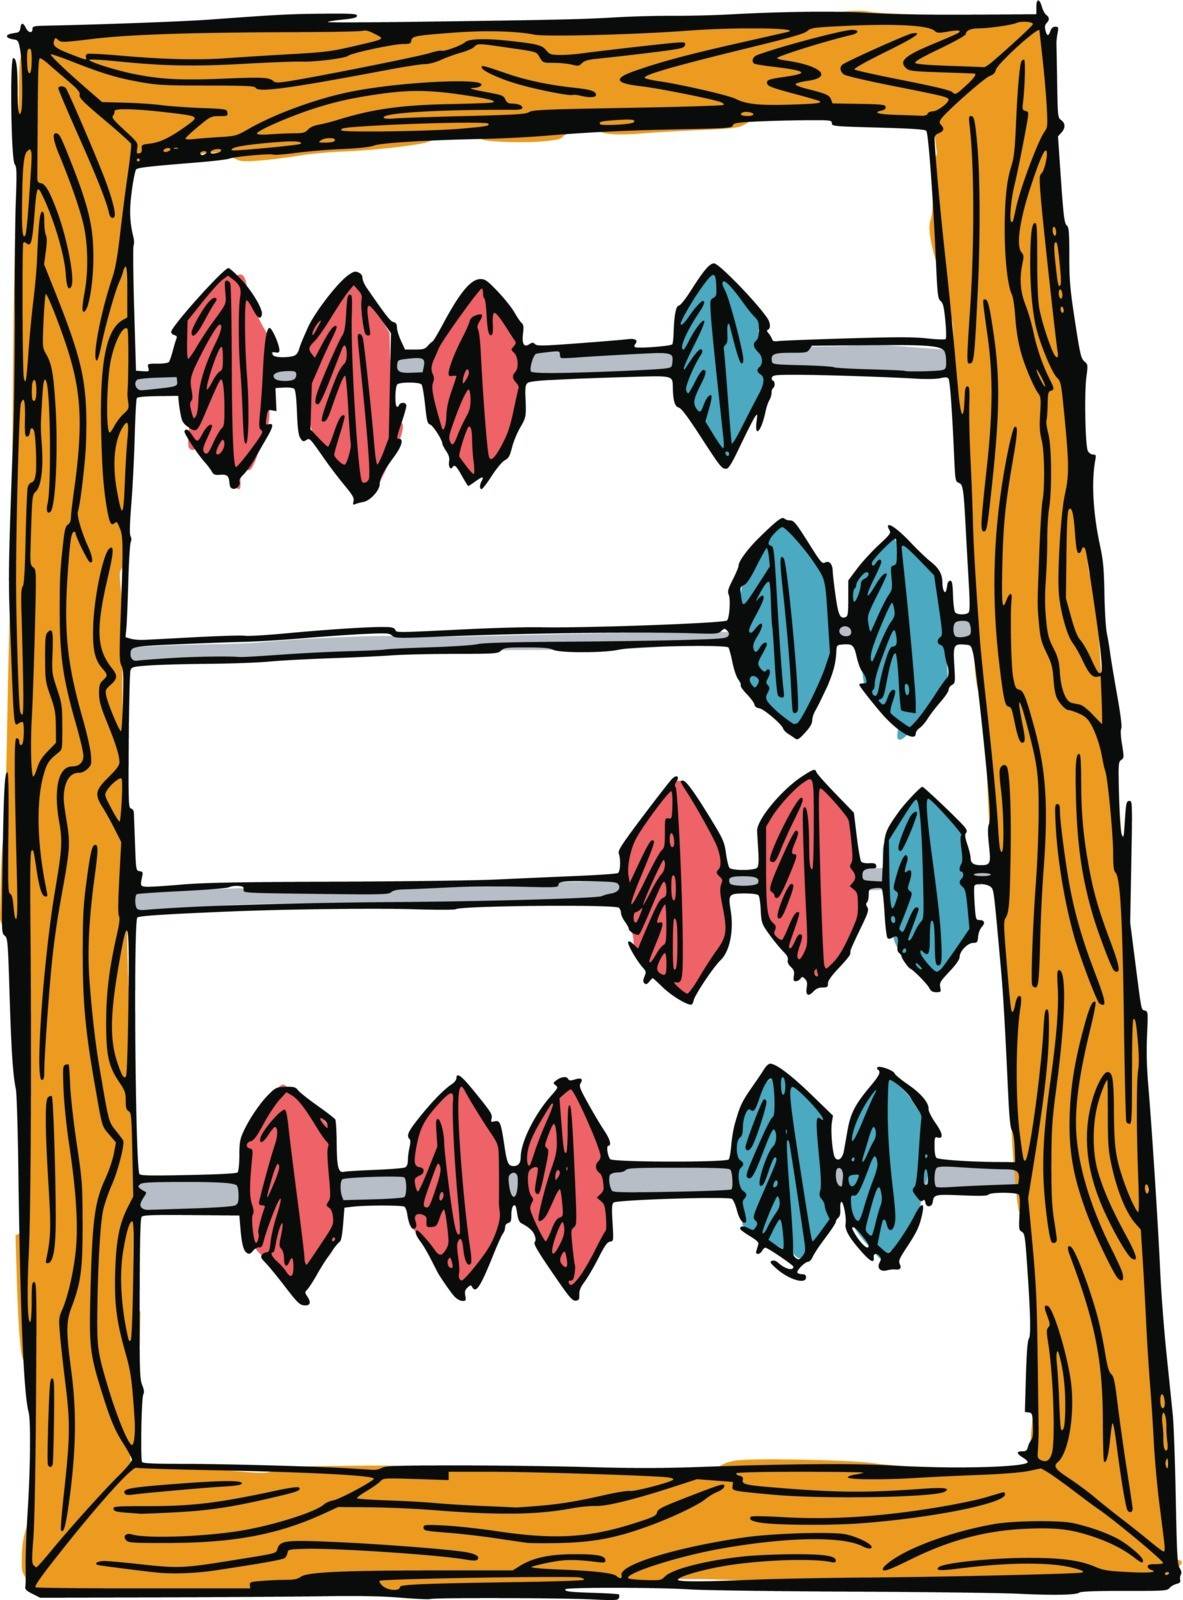 hand drawn, sketch, cartoon illustration of abacus